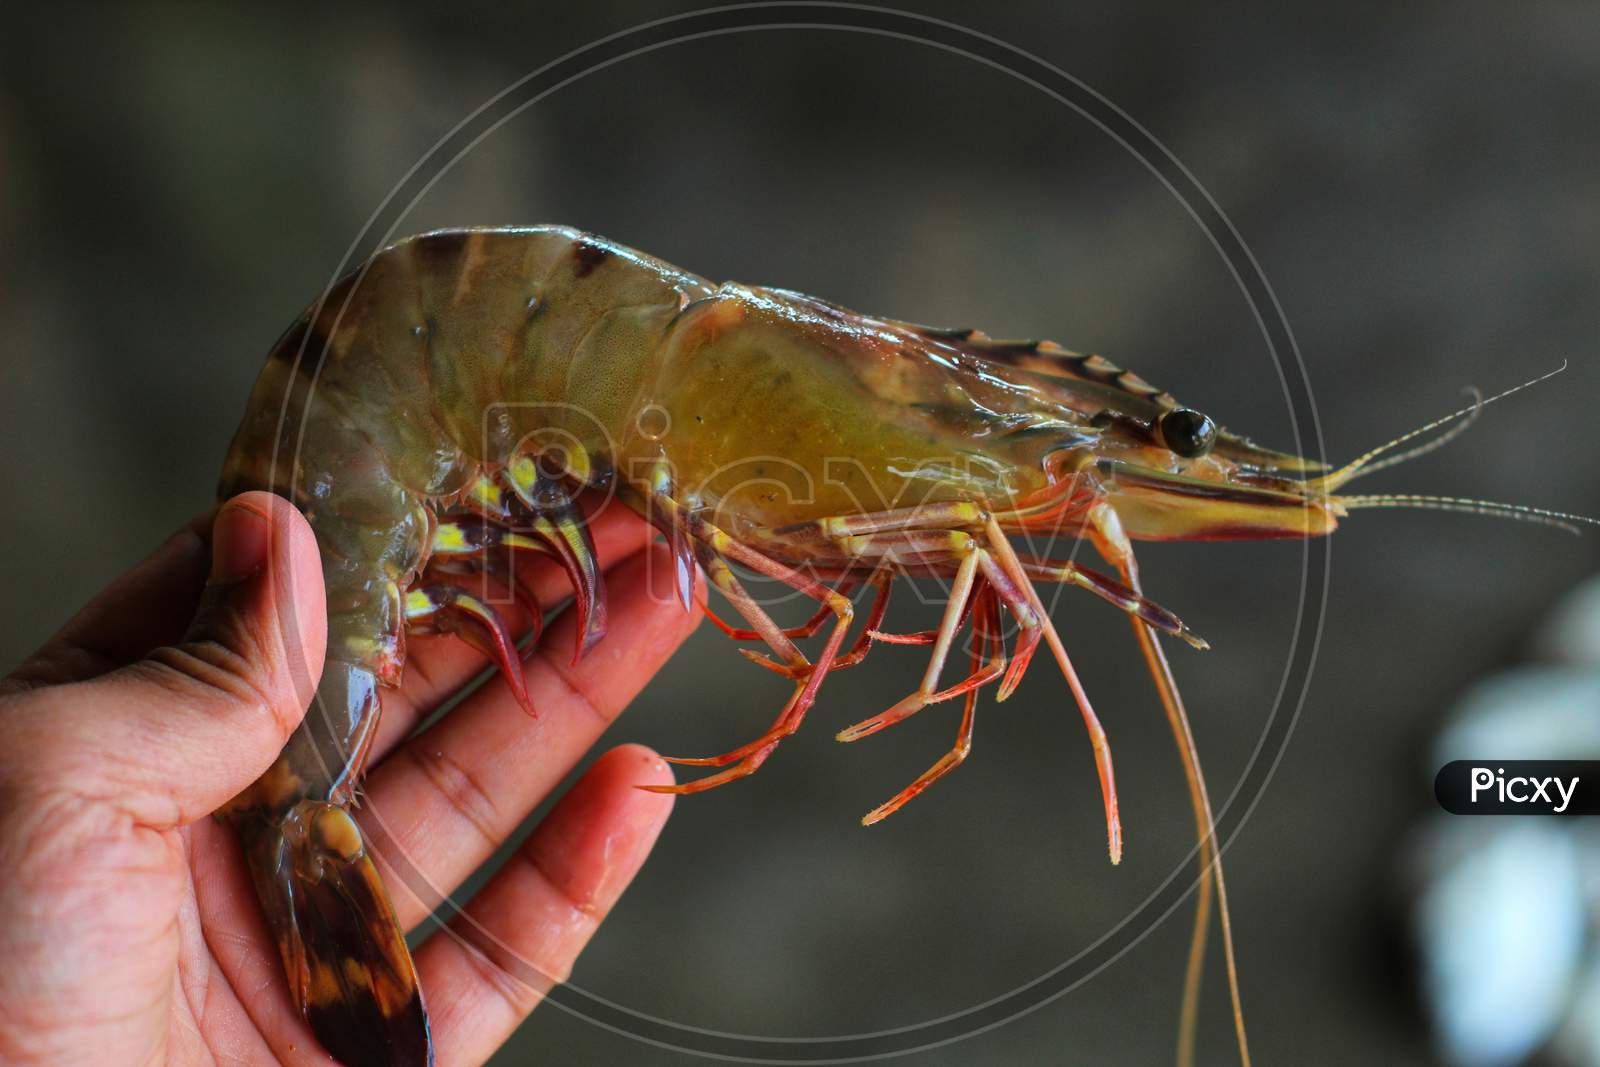 big tiger prawn in hand freshly harvested paeneus monodon shrimp in human hand